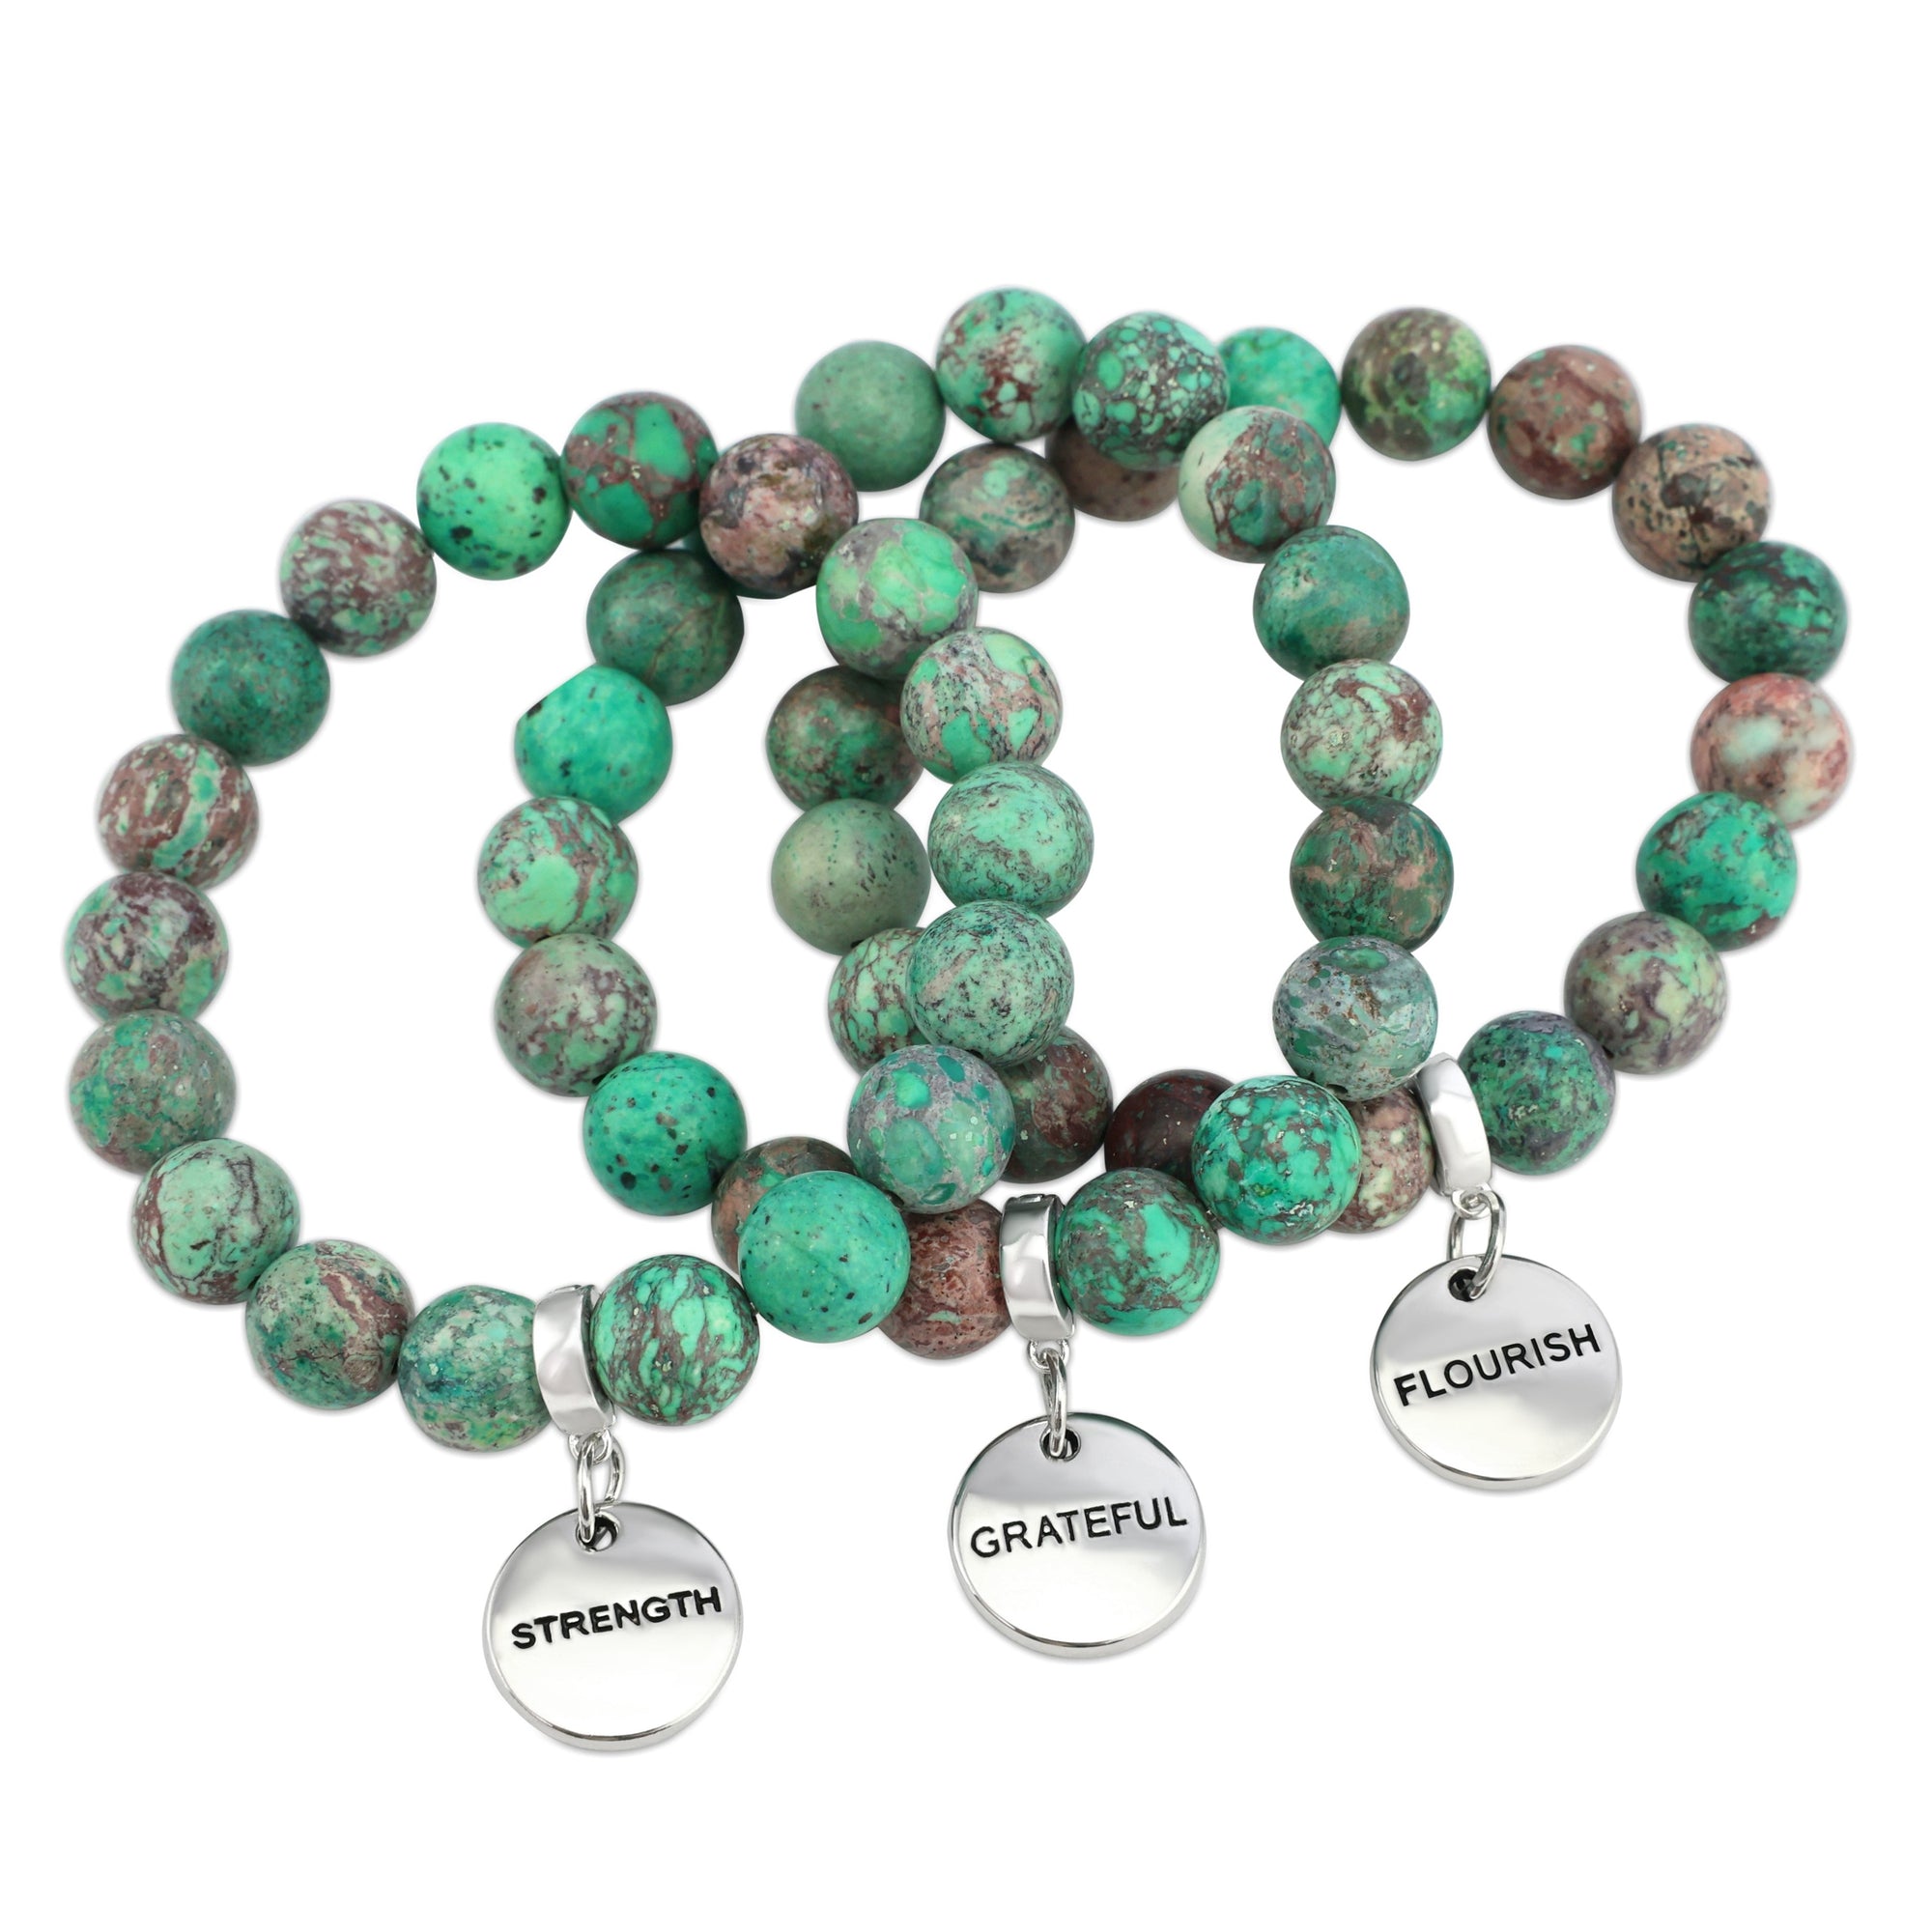 Precious Stone Bracelet - Minty Aqua Imperial Jasper 10mm Beads- With Silver Word Charms